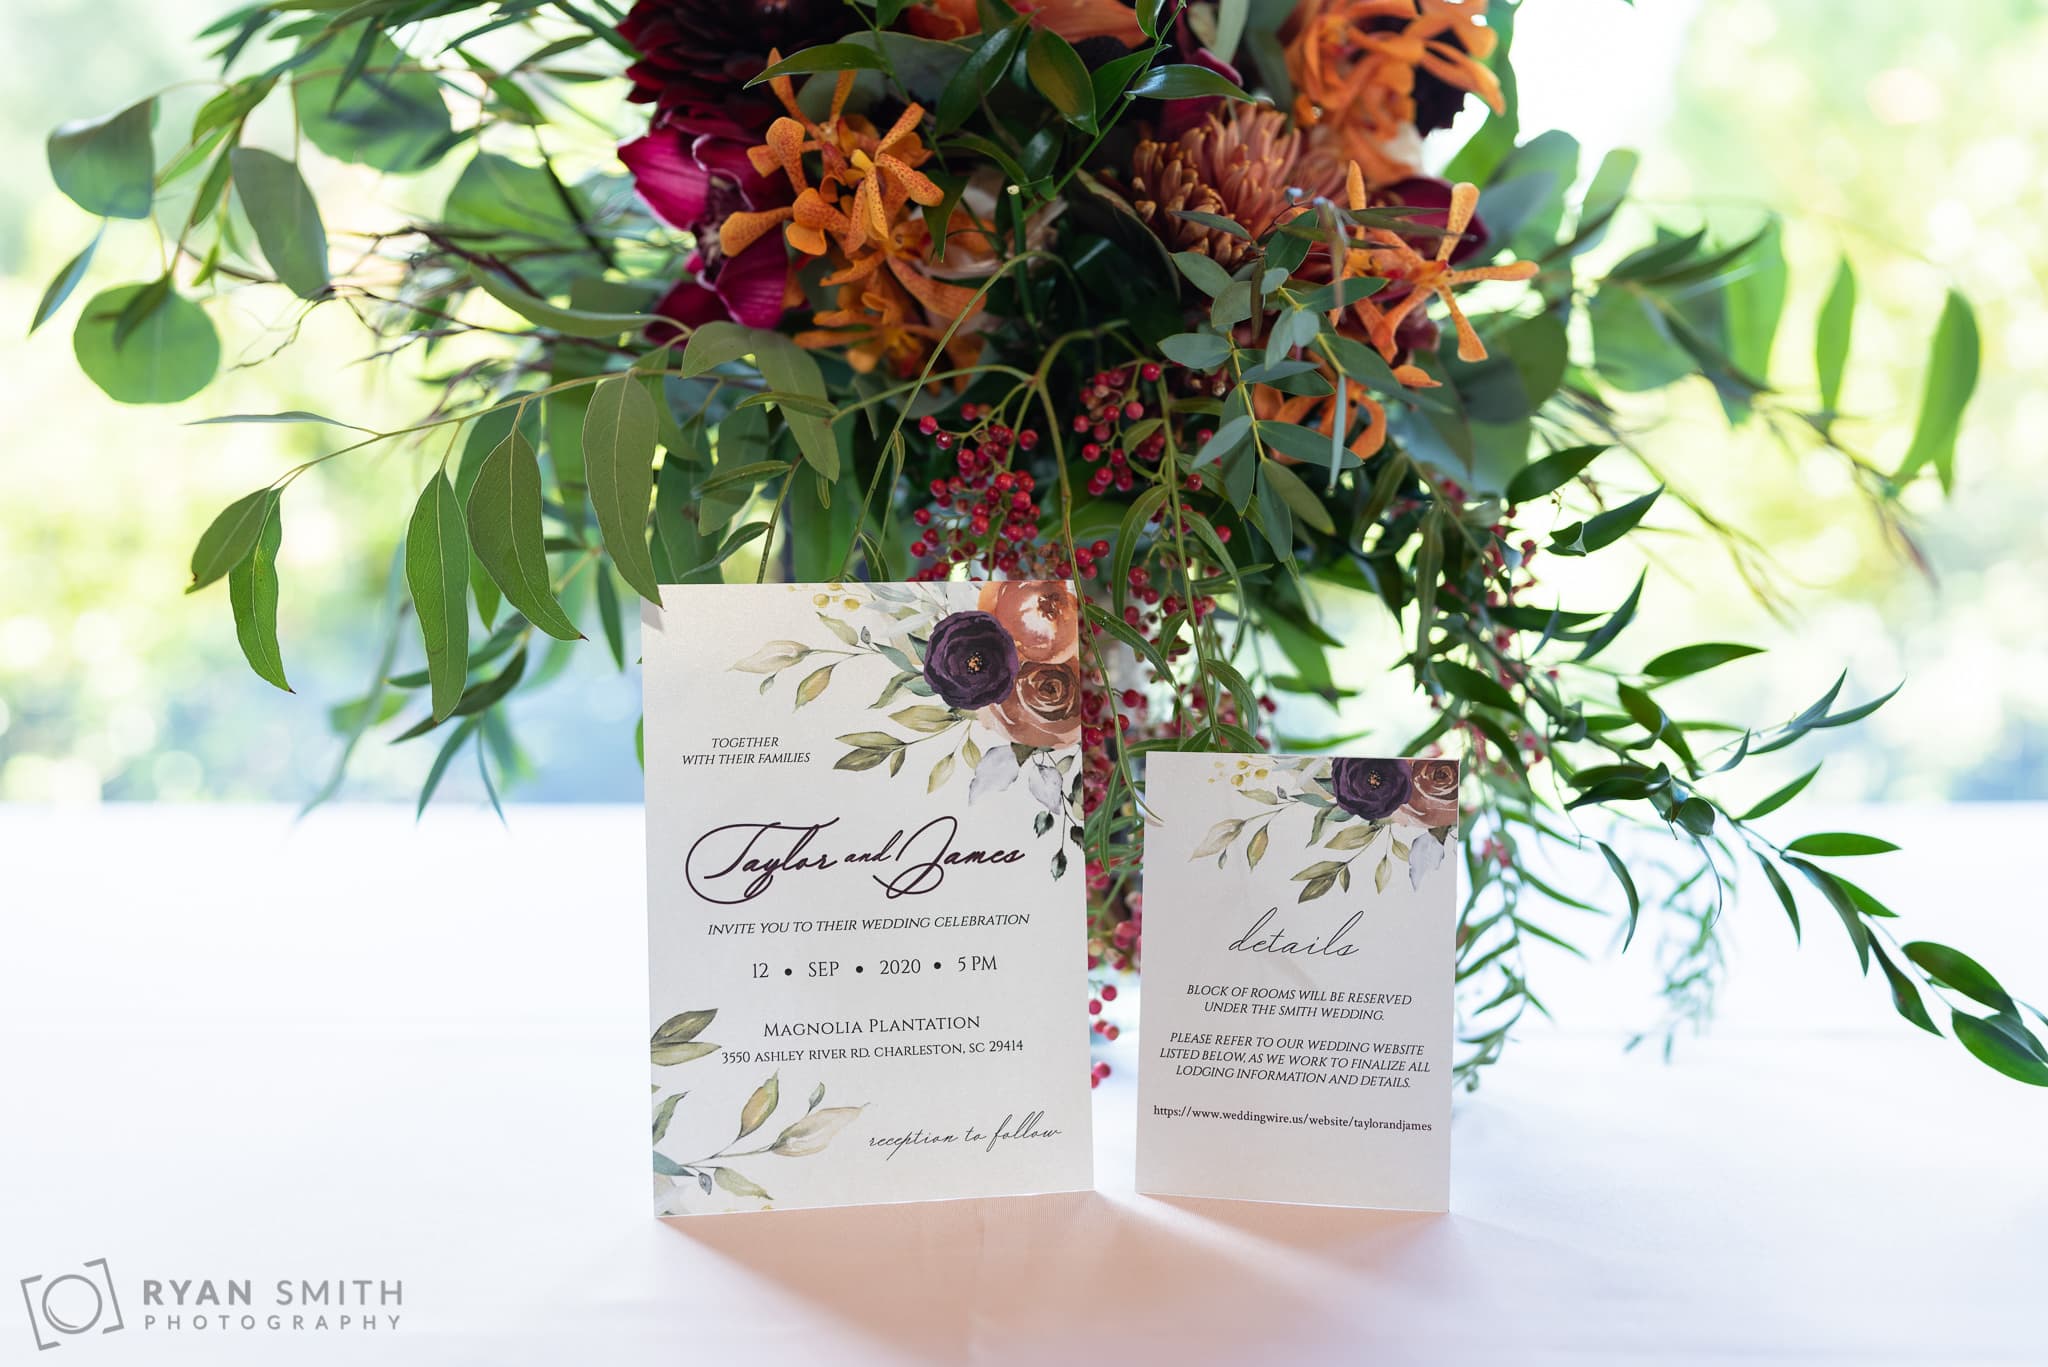 Wedding invitations leaning against the bouquet  - Magnolia Plantation - Charleston, SC